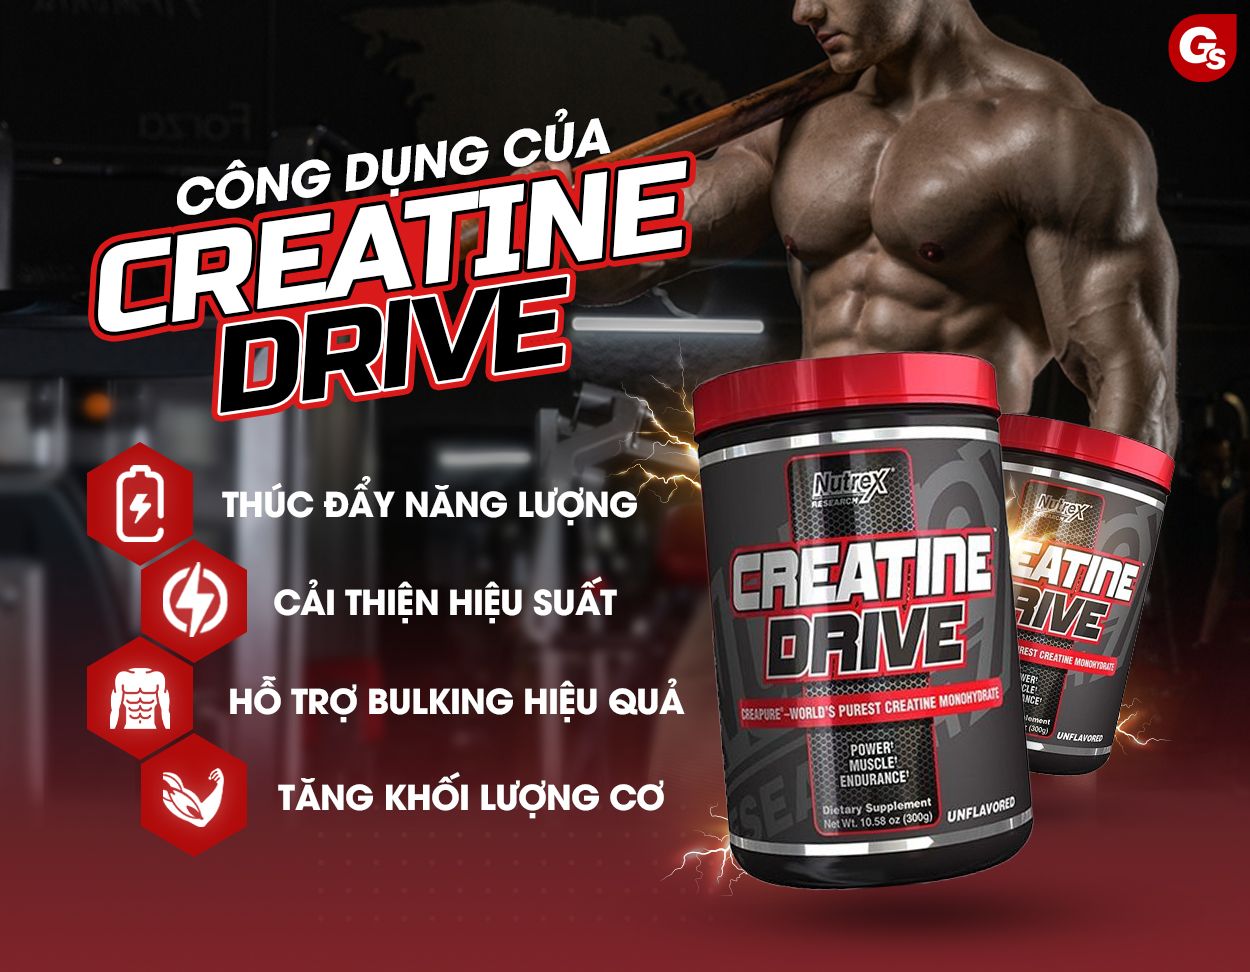 cong-dung-cua-creatine-drive-gymstore